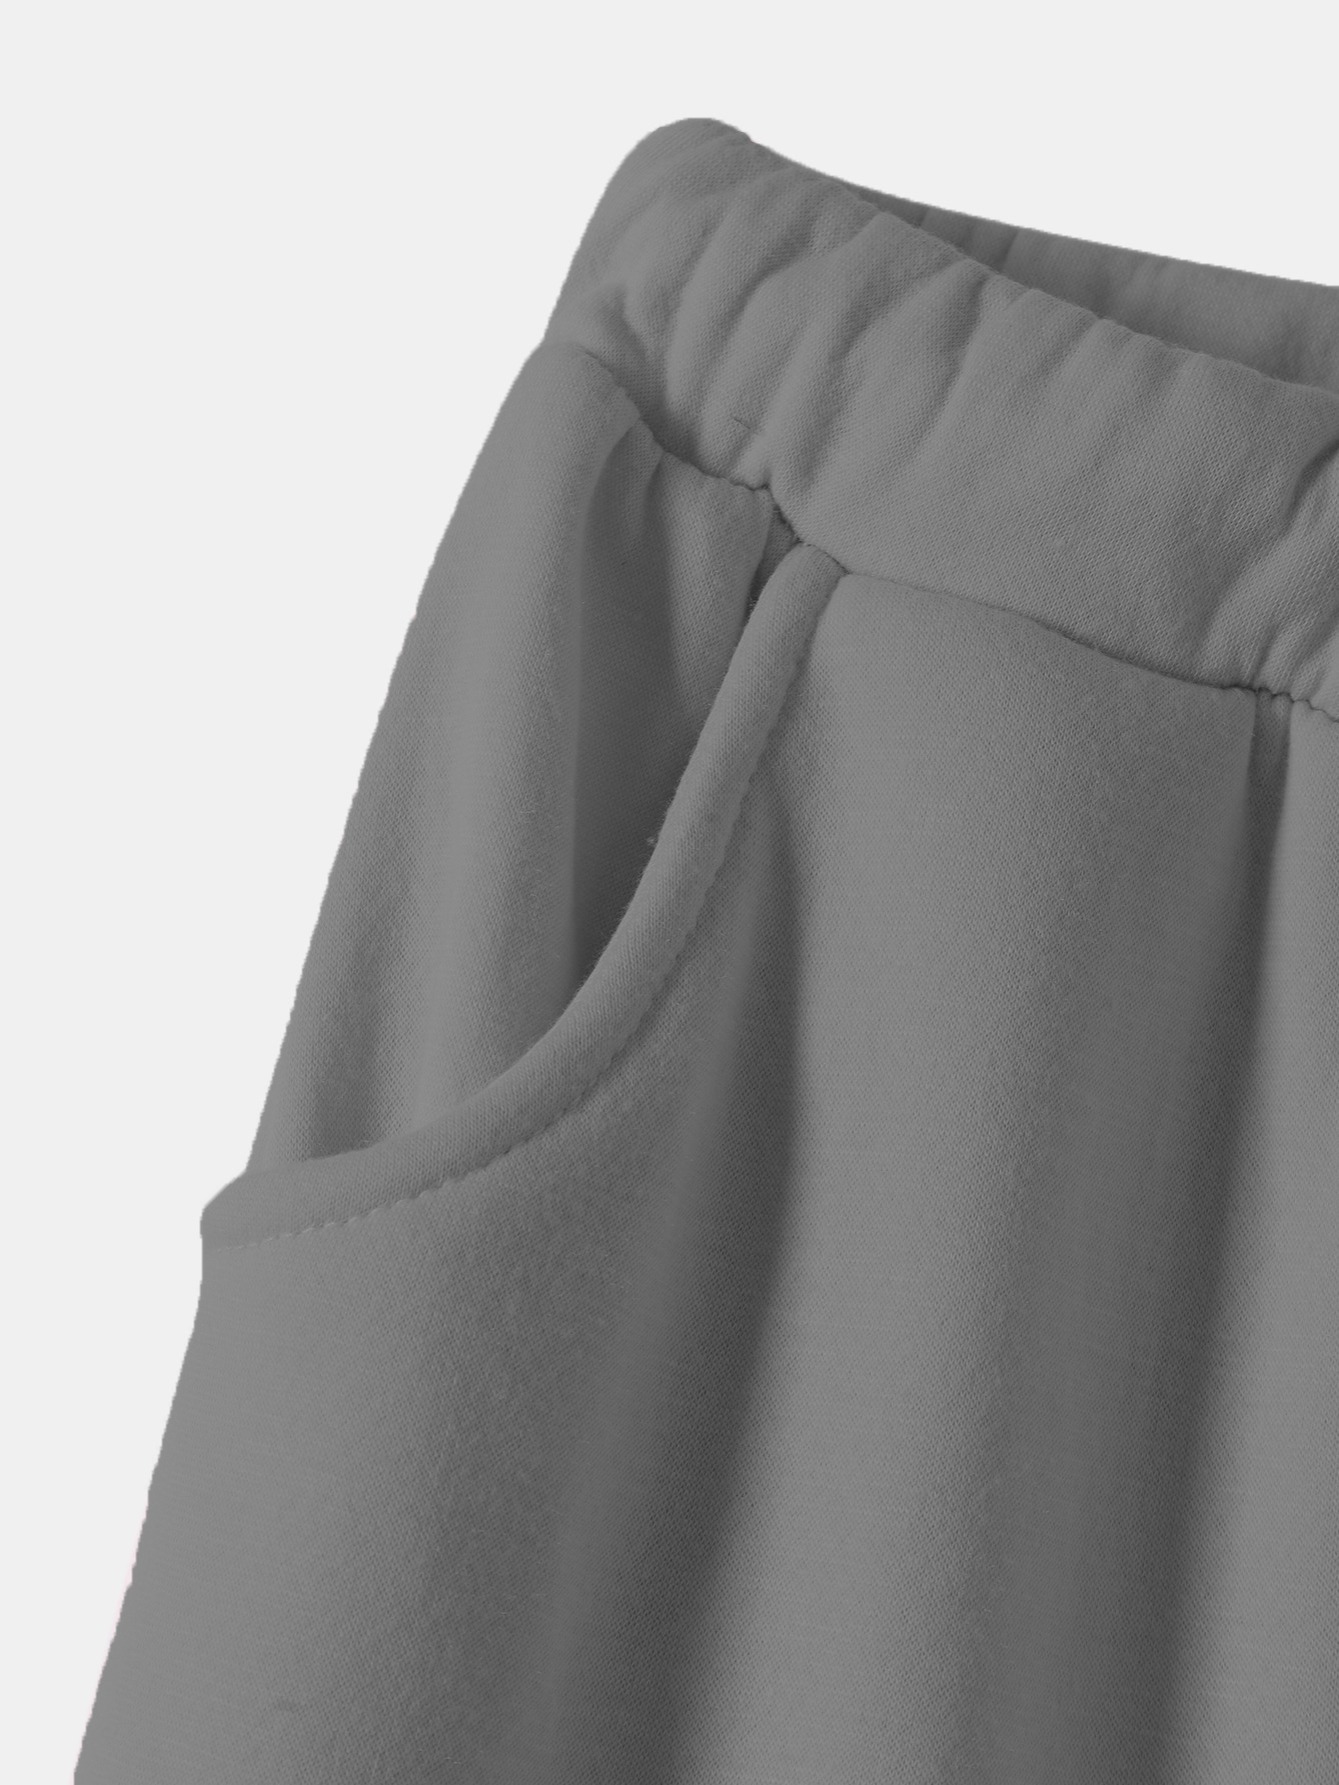 solid drawstring thermal sweatpants versatile loose comfy jogger pants womens clothing details 22